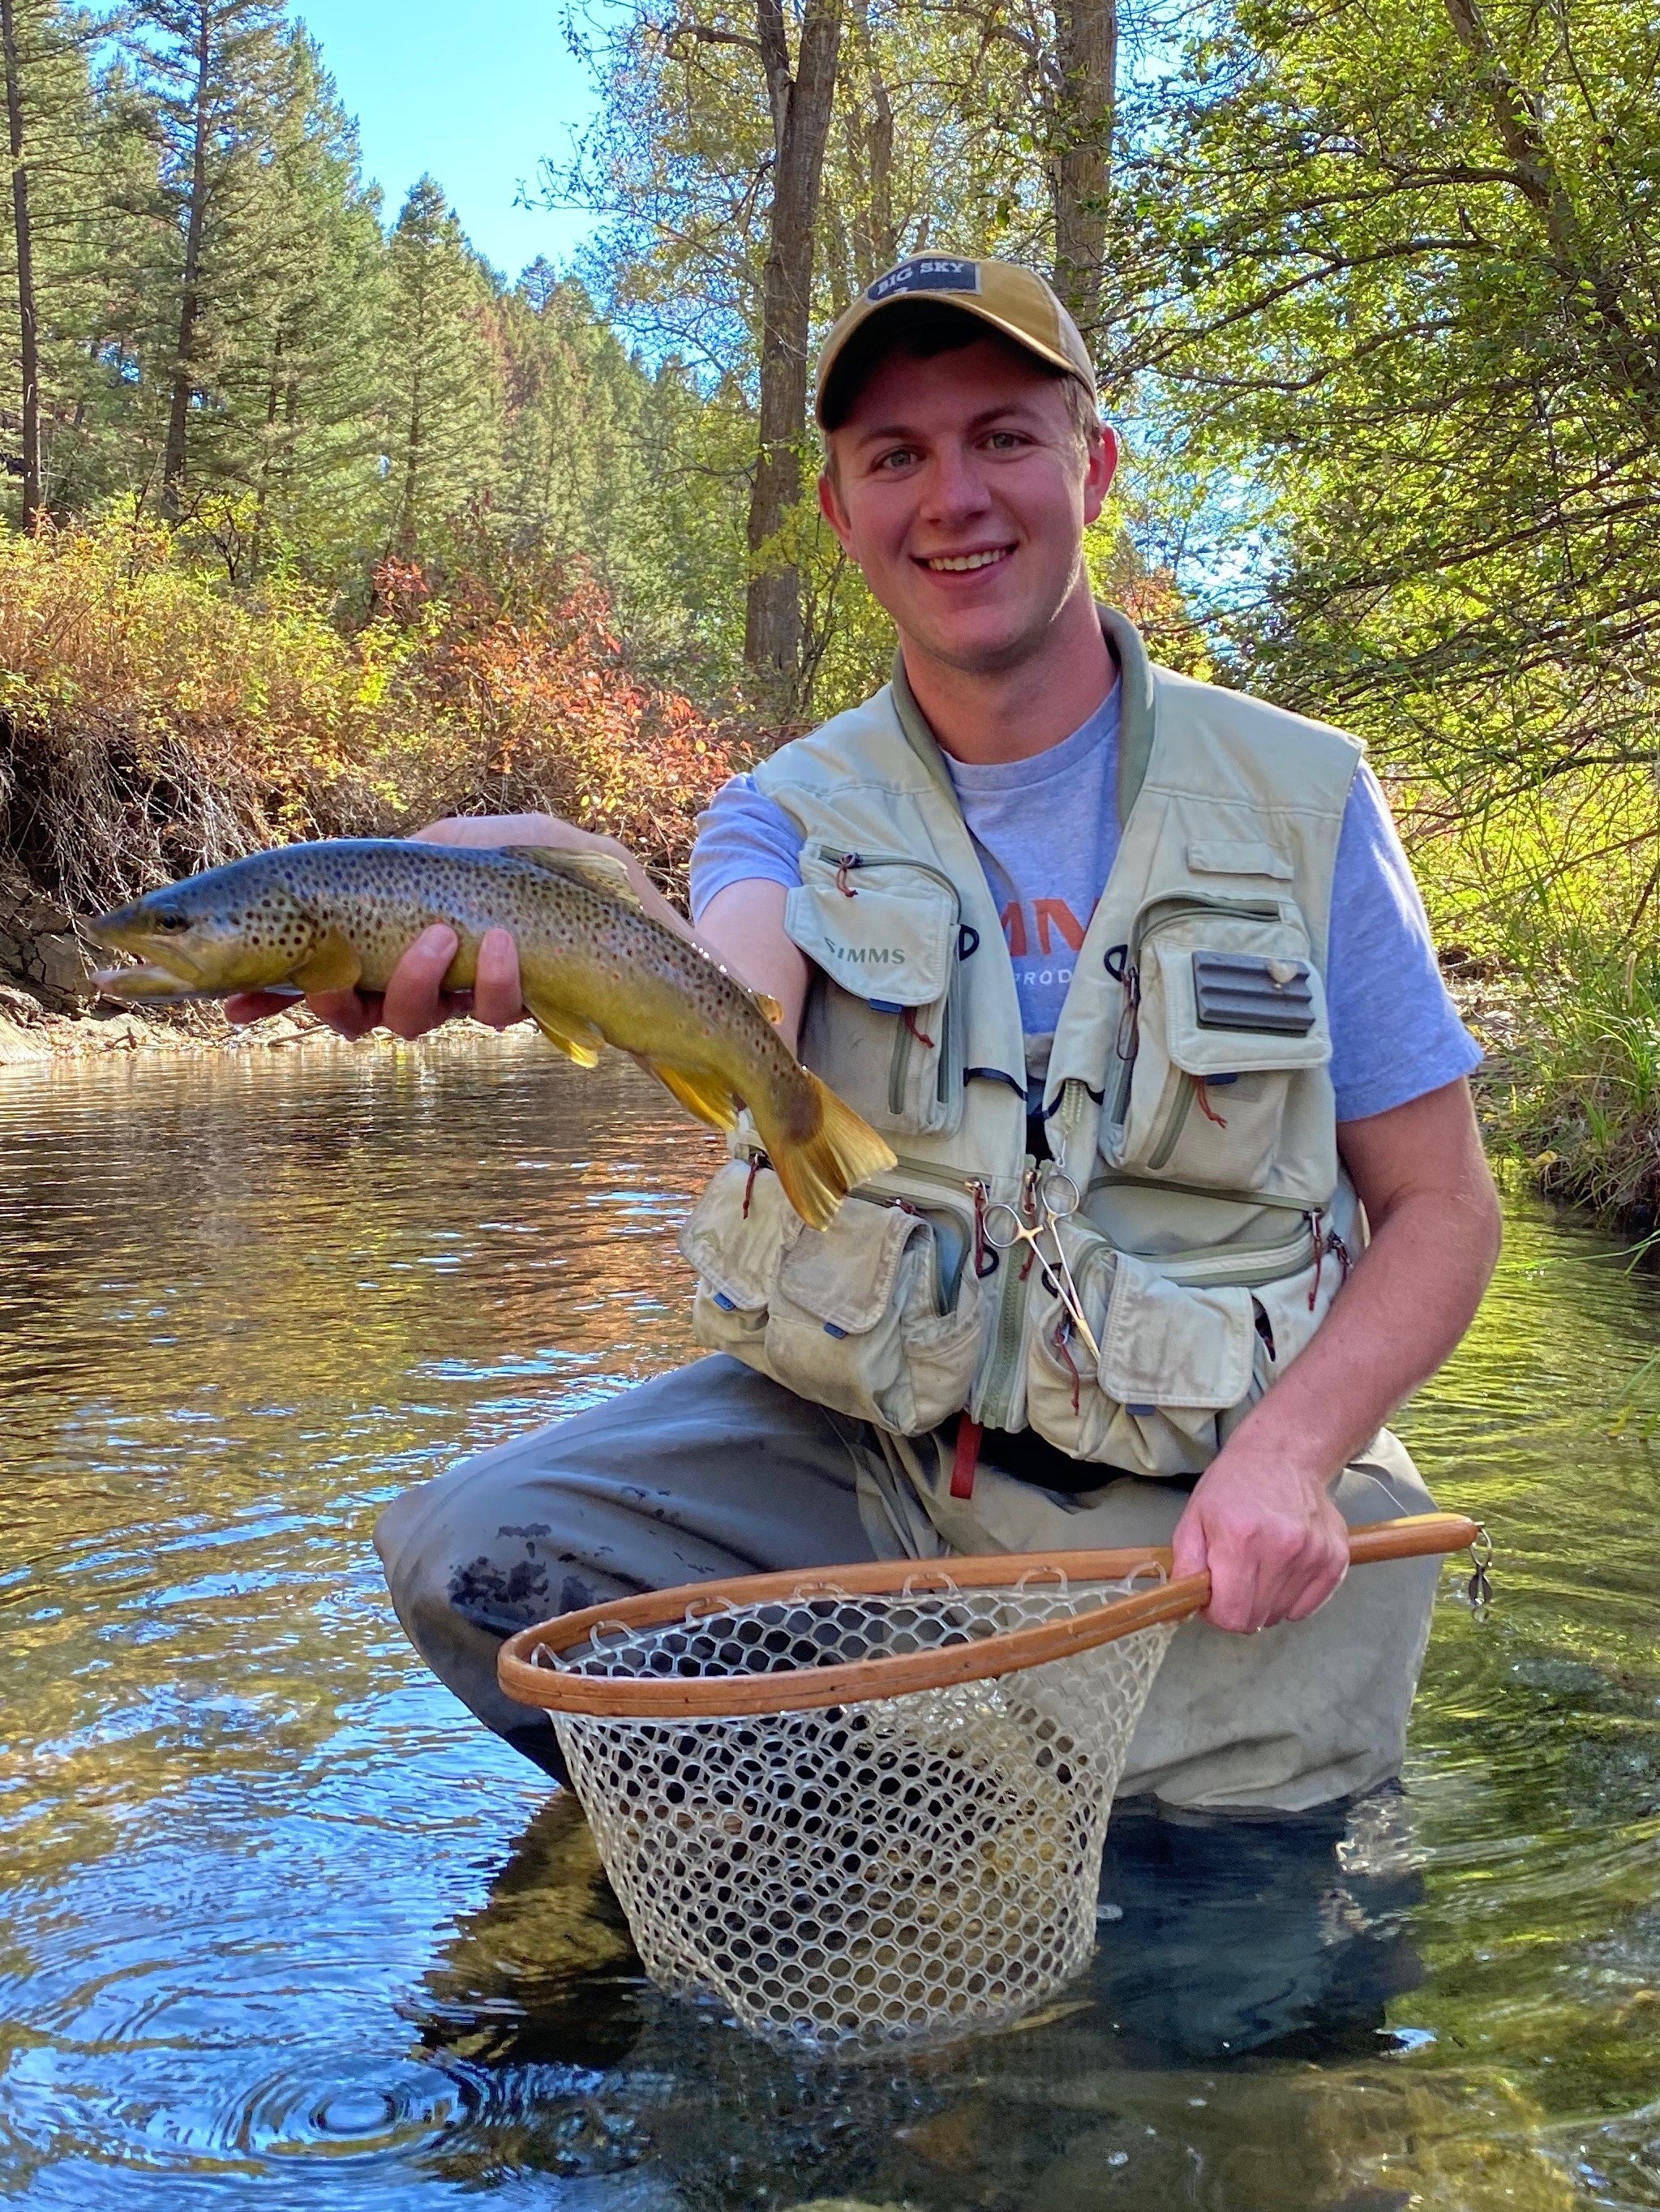 Matt Deyoe posing with a fish in a stream.